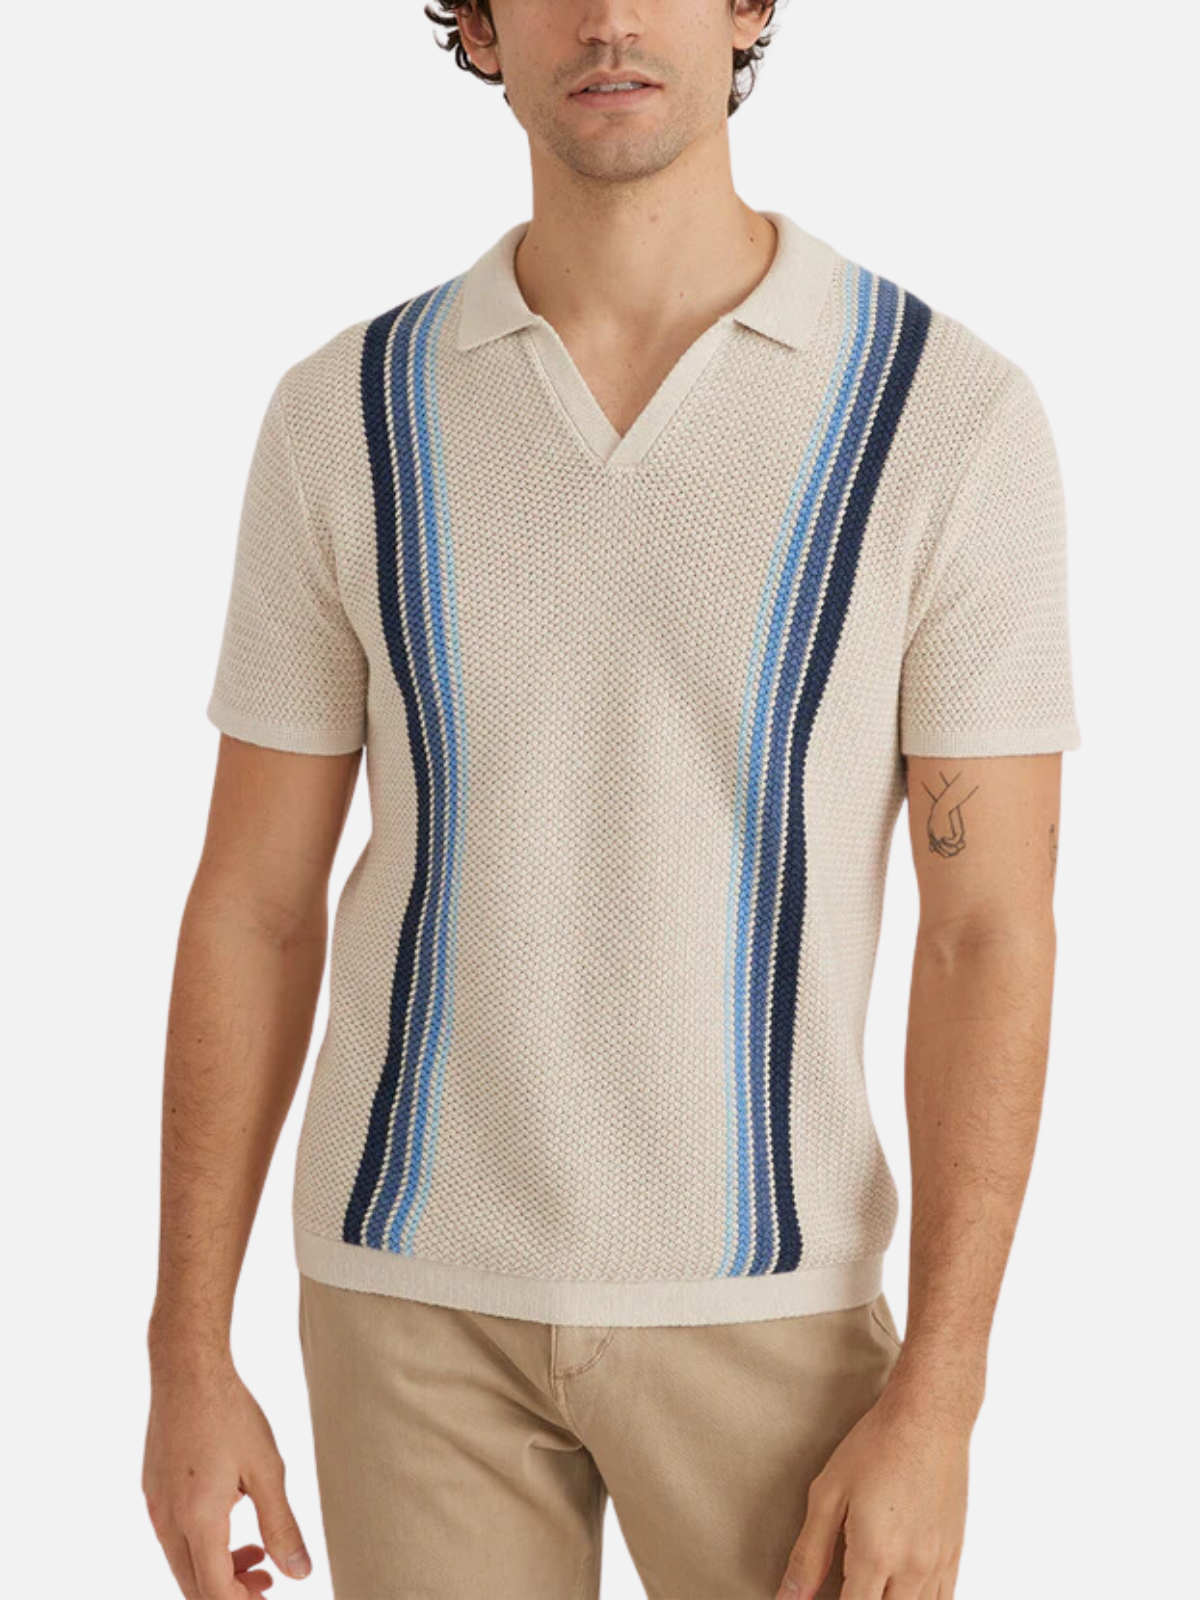 marine layer conrad stripe sweater polo 100% cotton construction oatmeal cream blue stripe kempt athens ga georgia men's clothing store